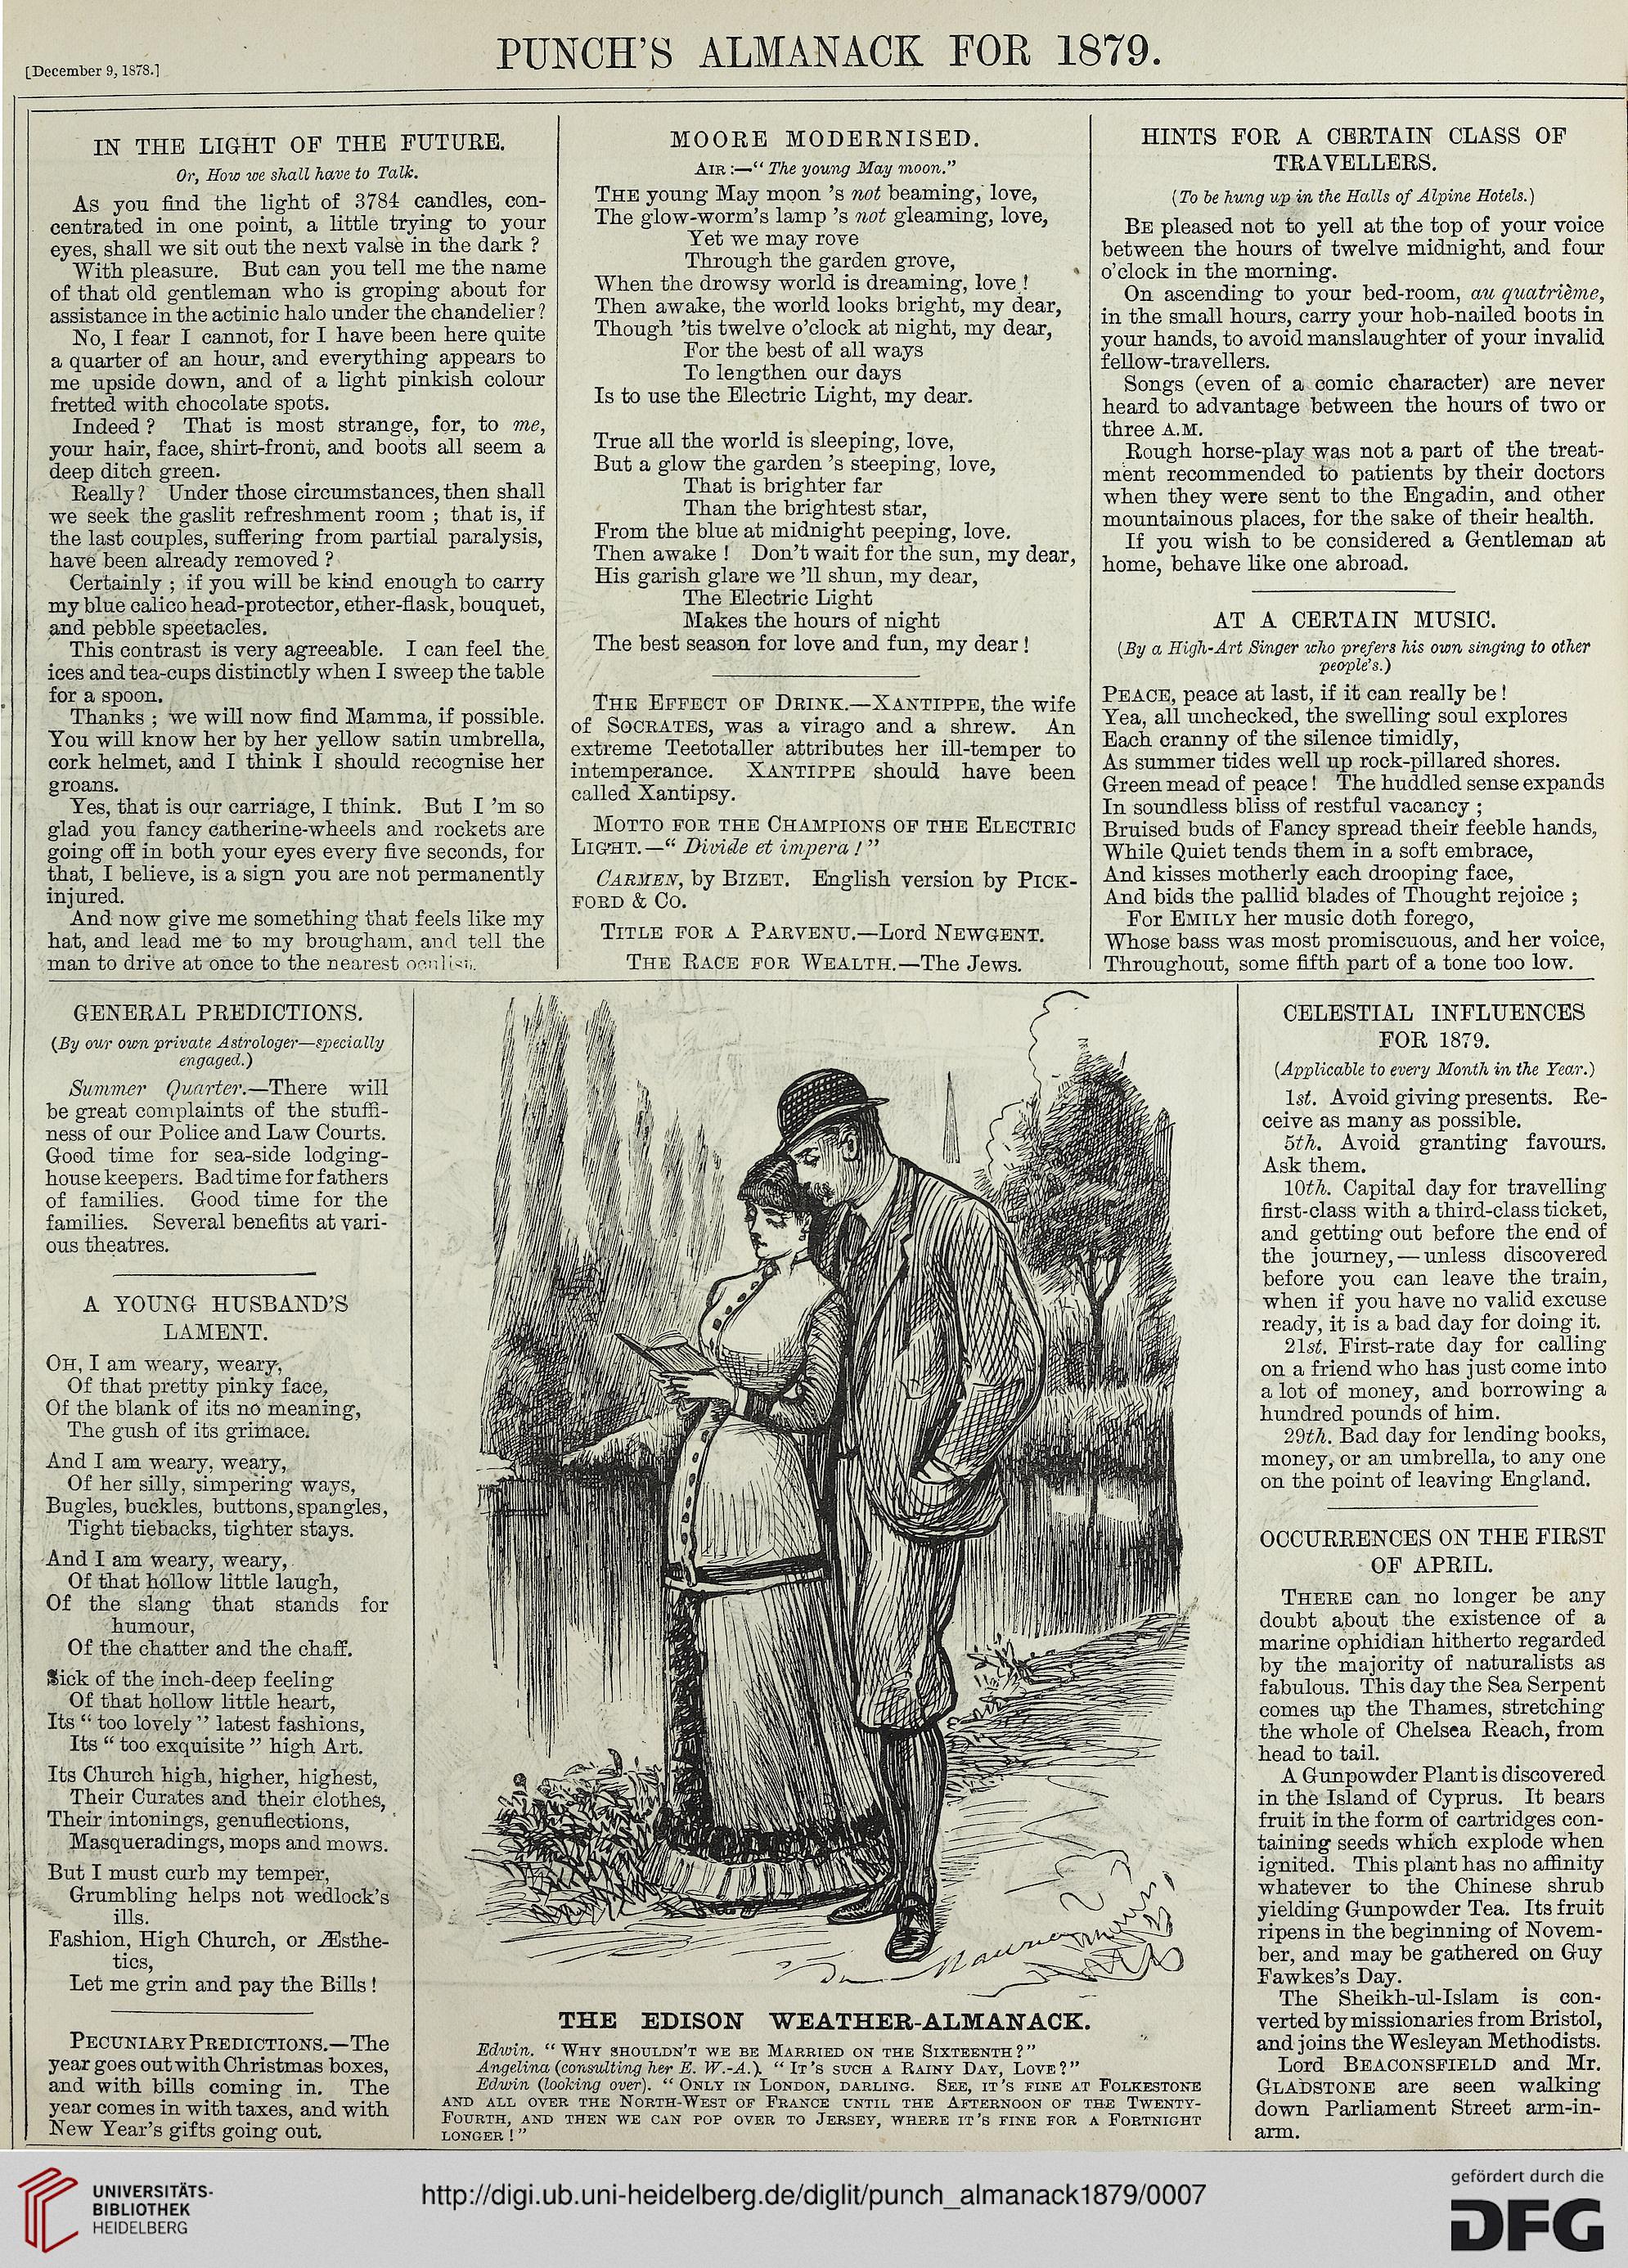 Punch Almanack 1879